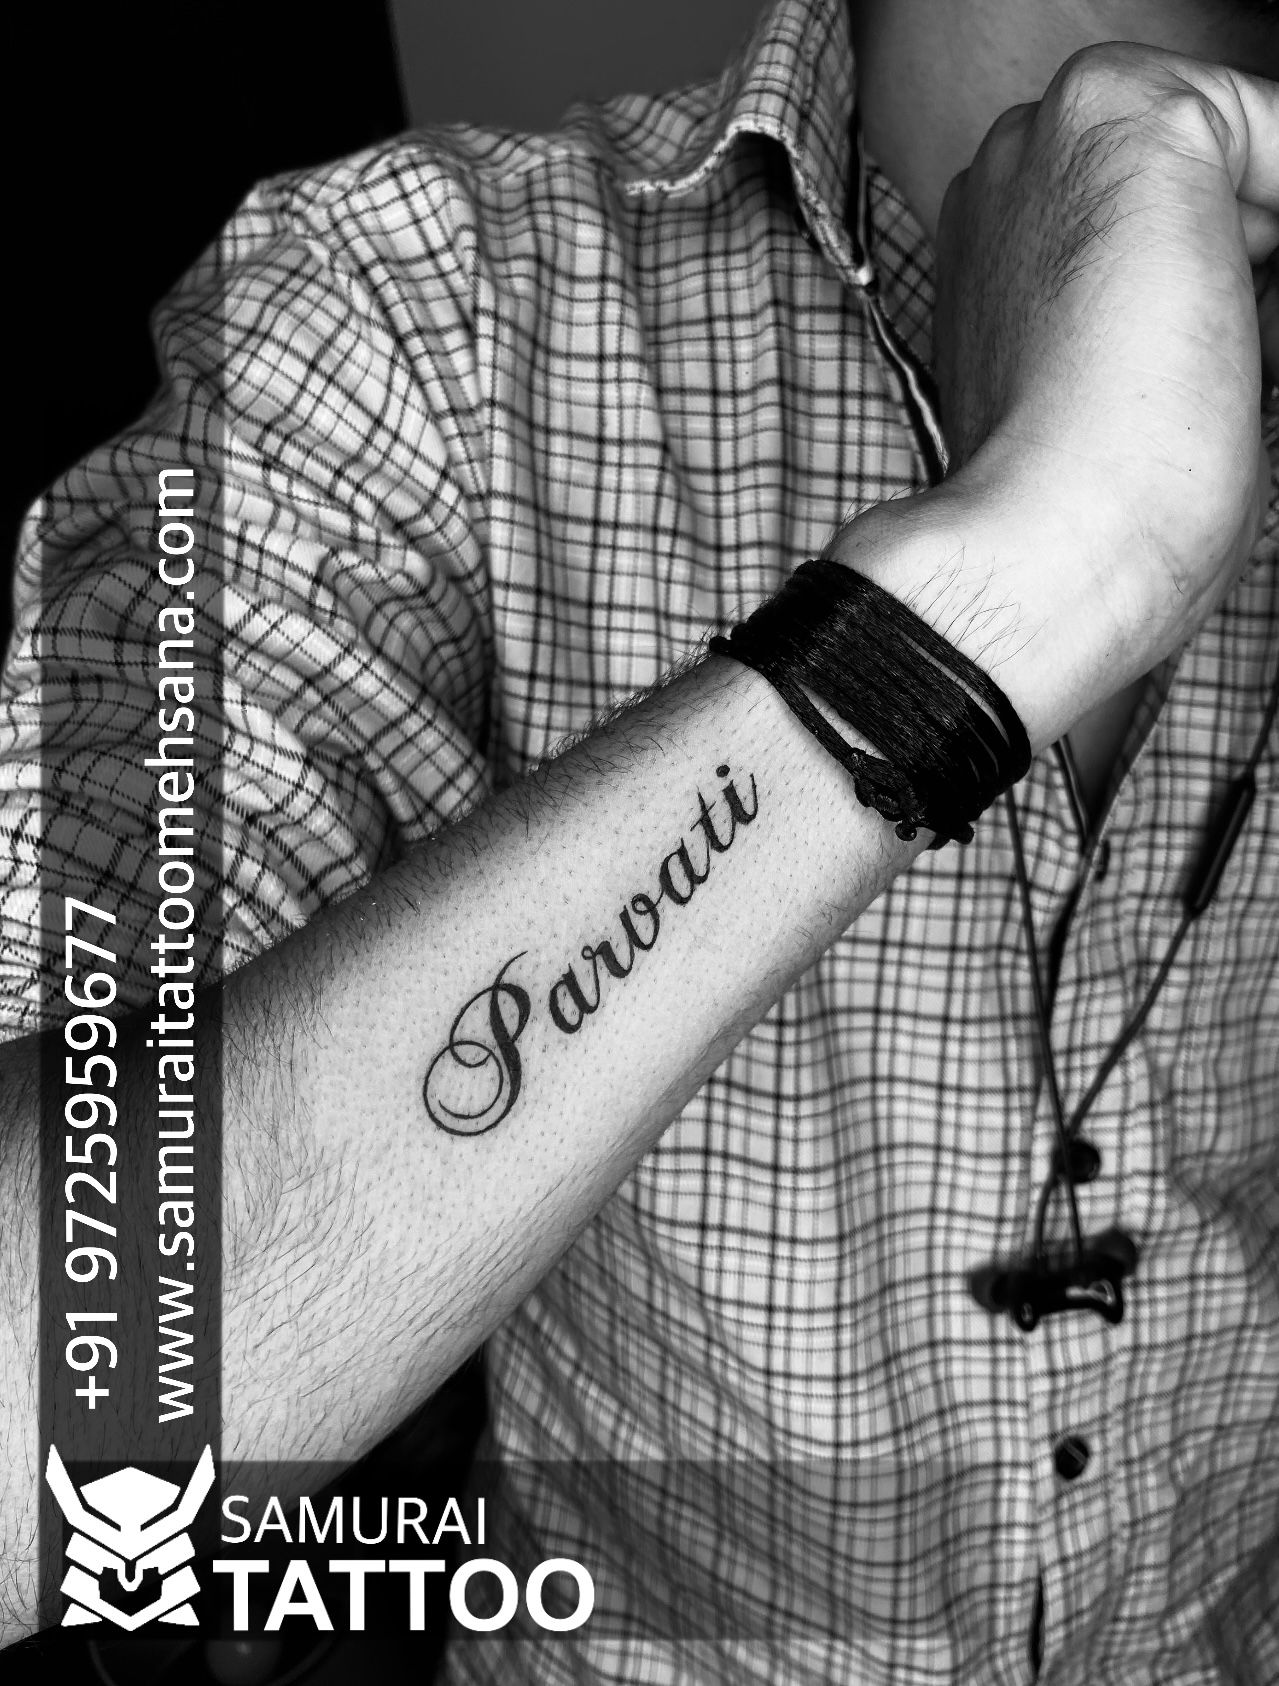 A Stroke Of Genius Tattoos (@sogtattoos) • Instagram photos and videos